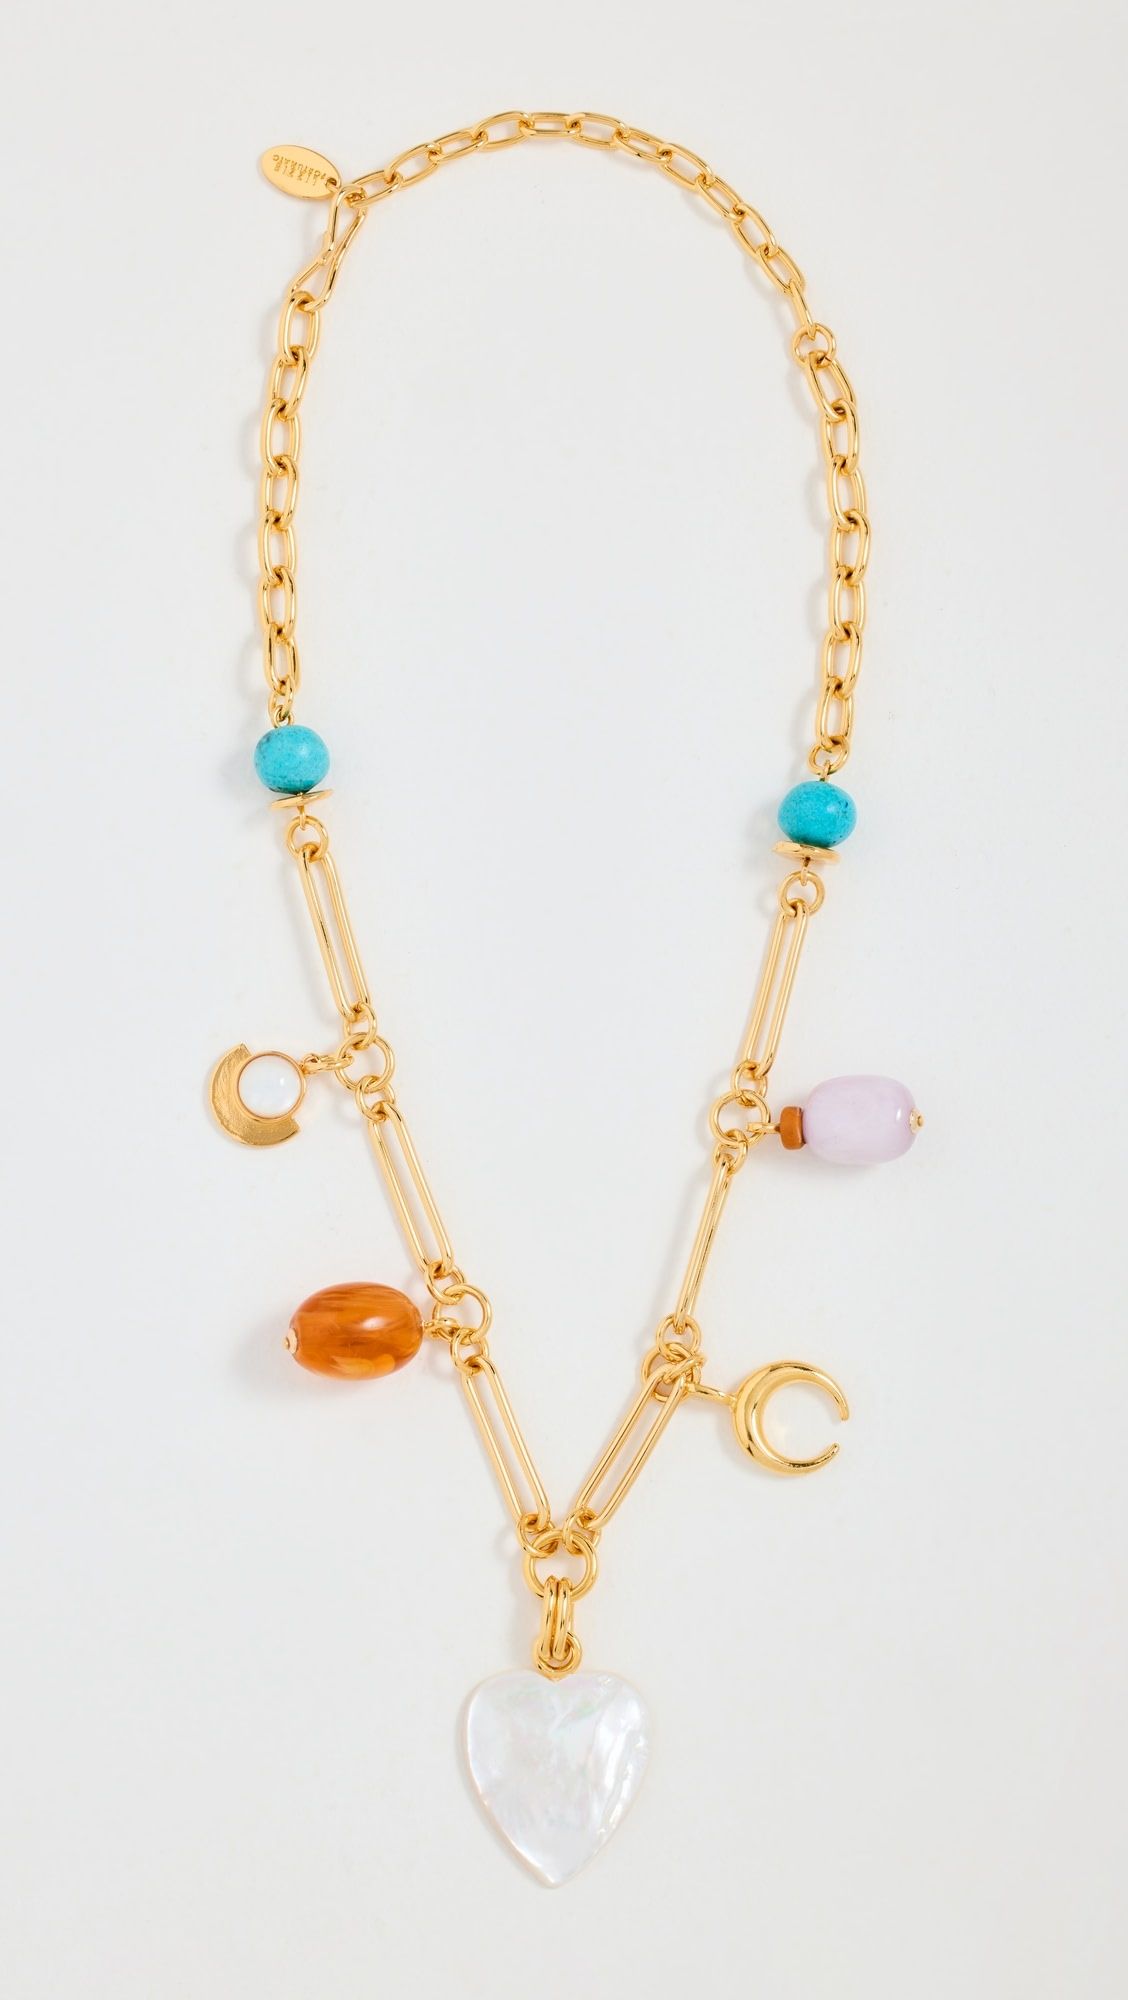 Moonlight Charm Necklace | Shopbop